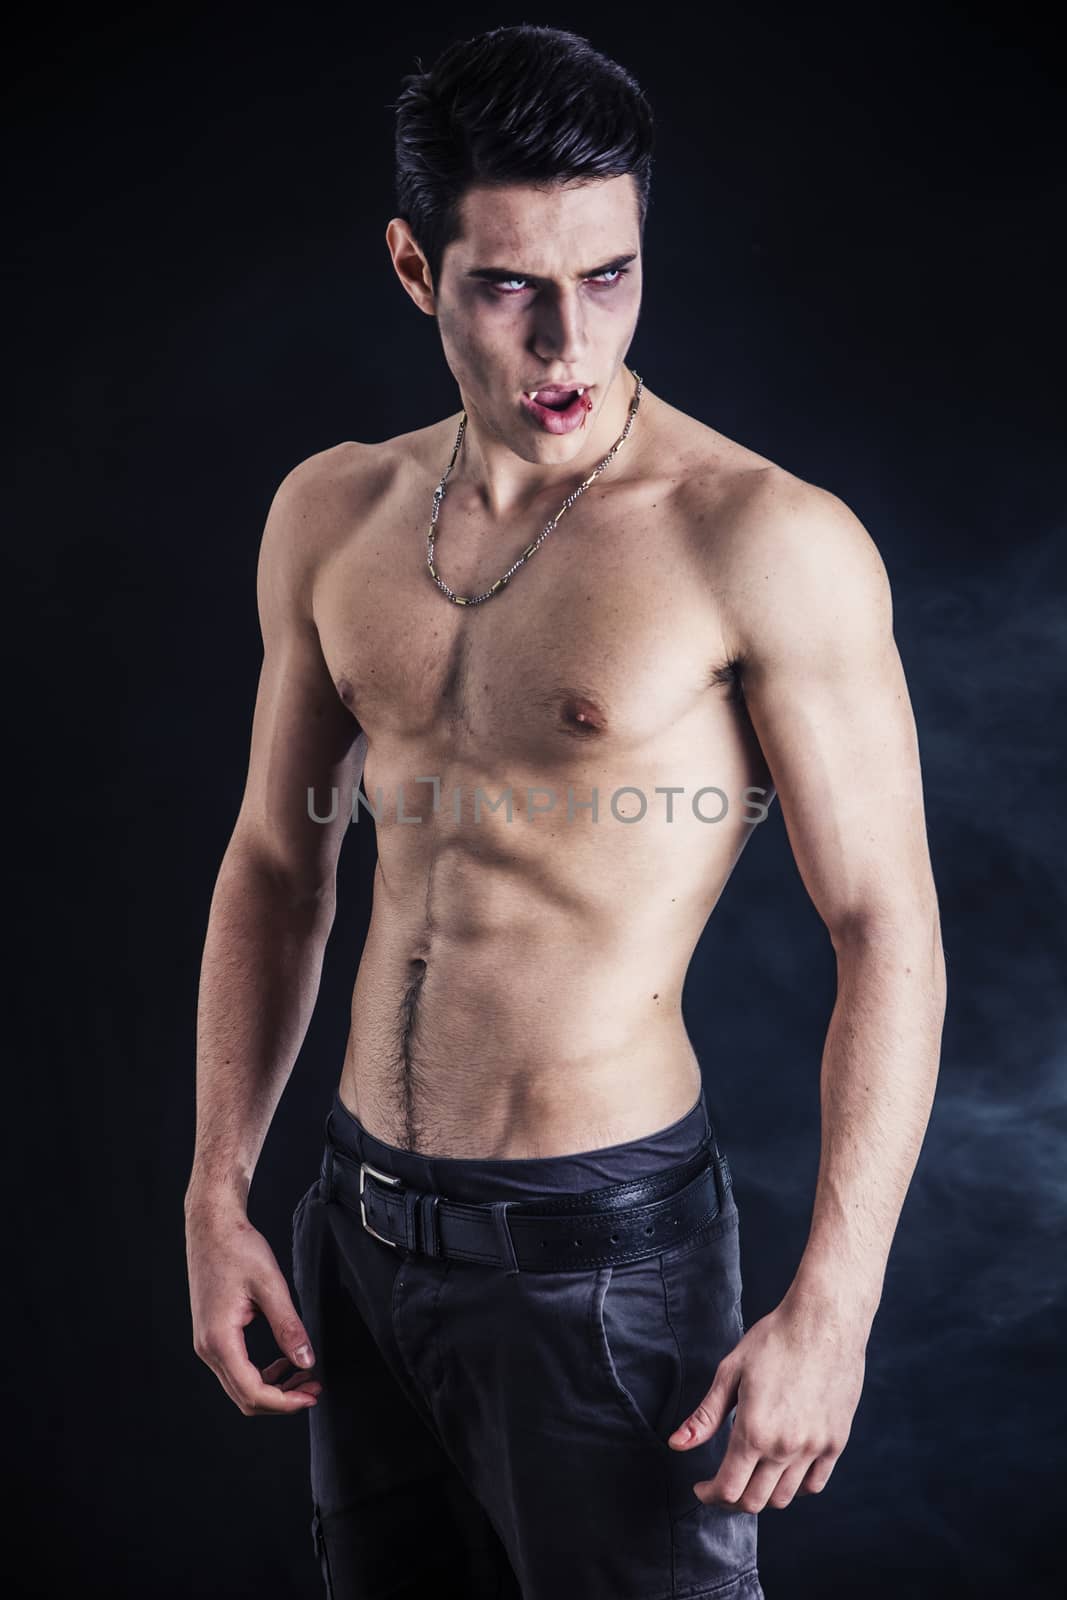 Young Vampire Man Shirtless, Gesturing to Camera by artofphoto